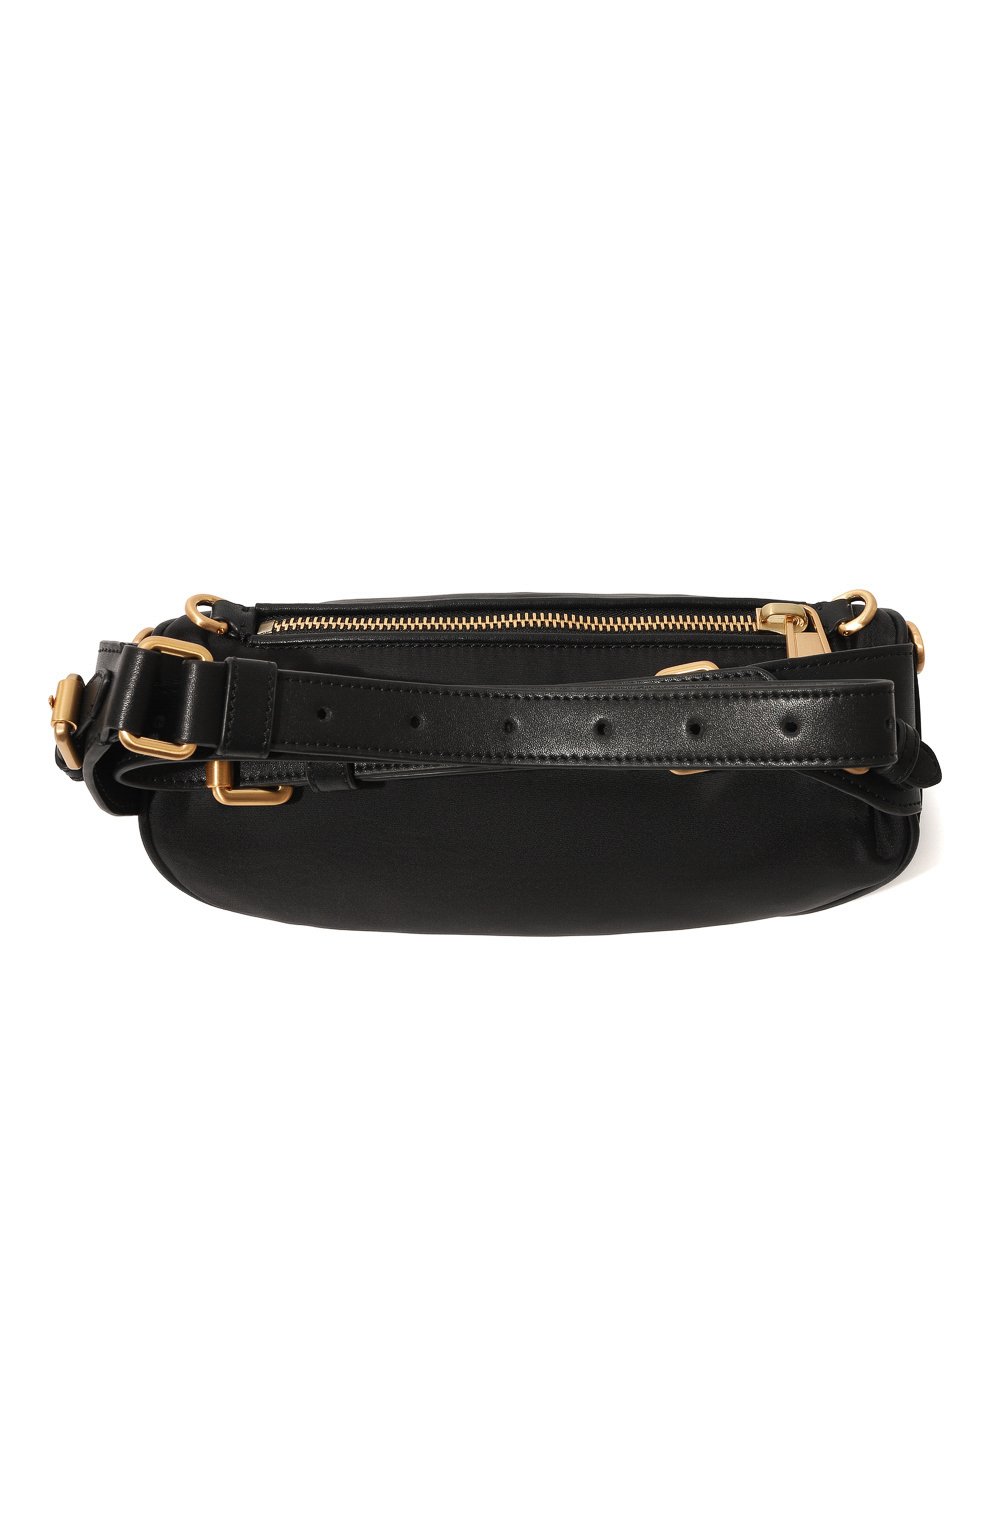 Поясная сумка Belt Moschino 2317 B7707/8202, цвет чёрный, размер NS 2317 B7707/8202 - фото 6